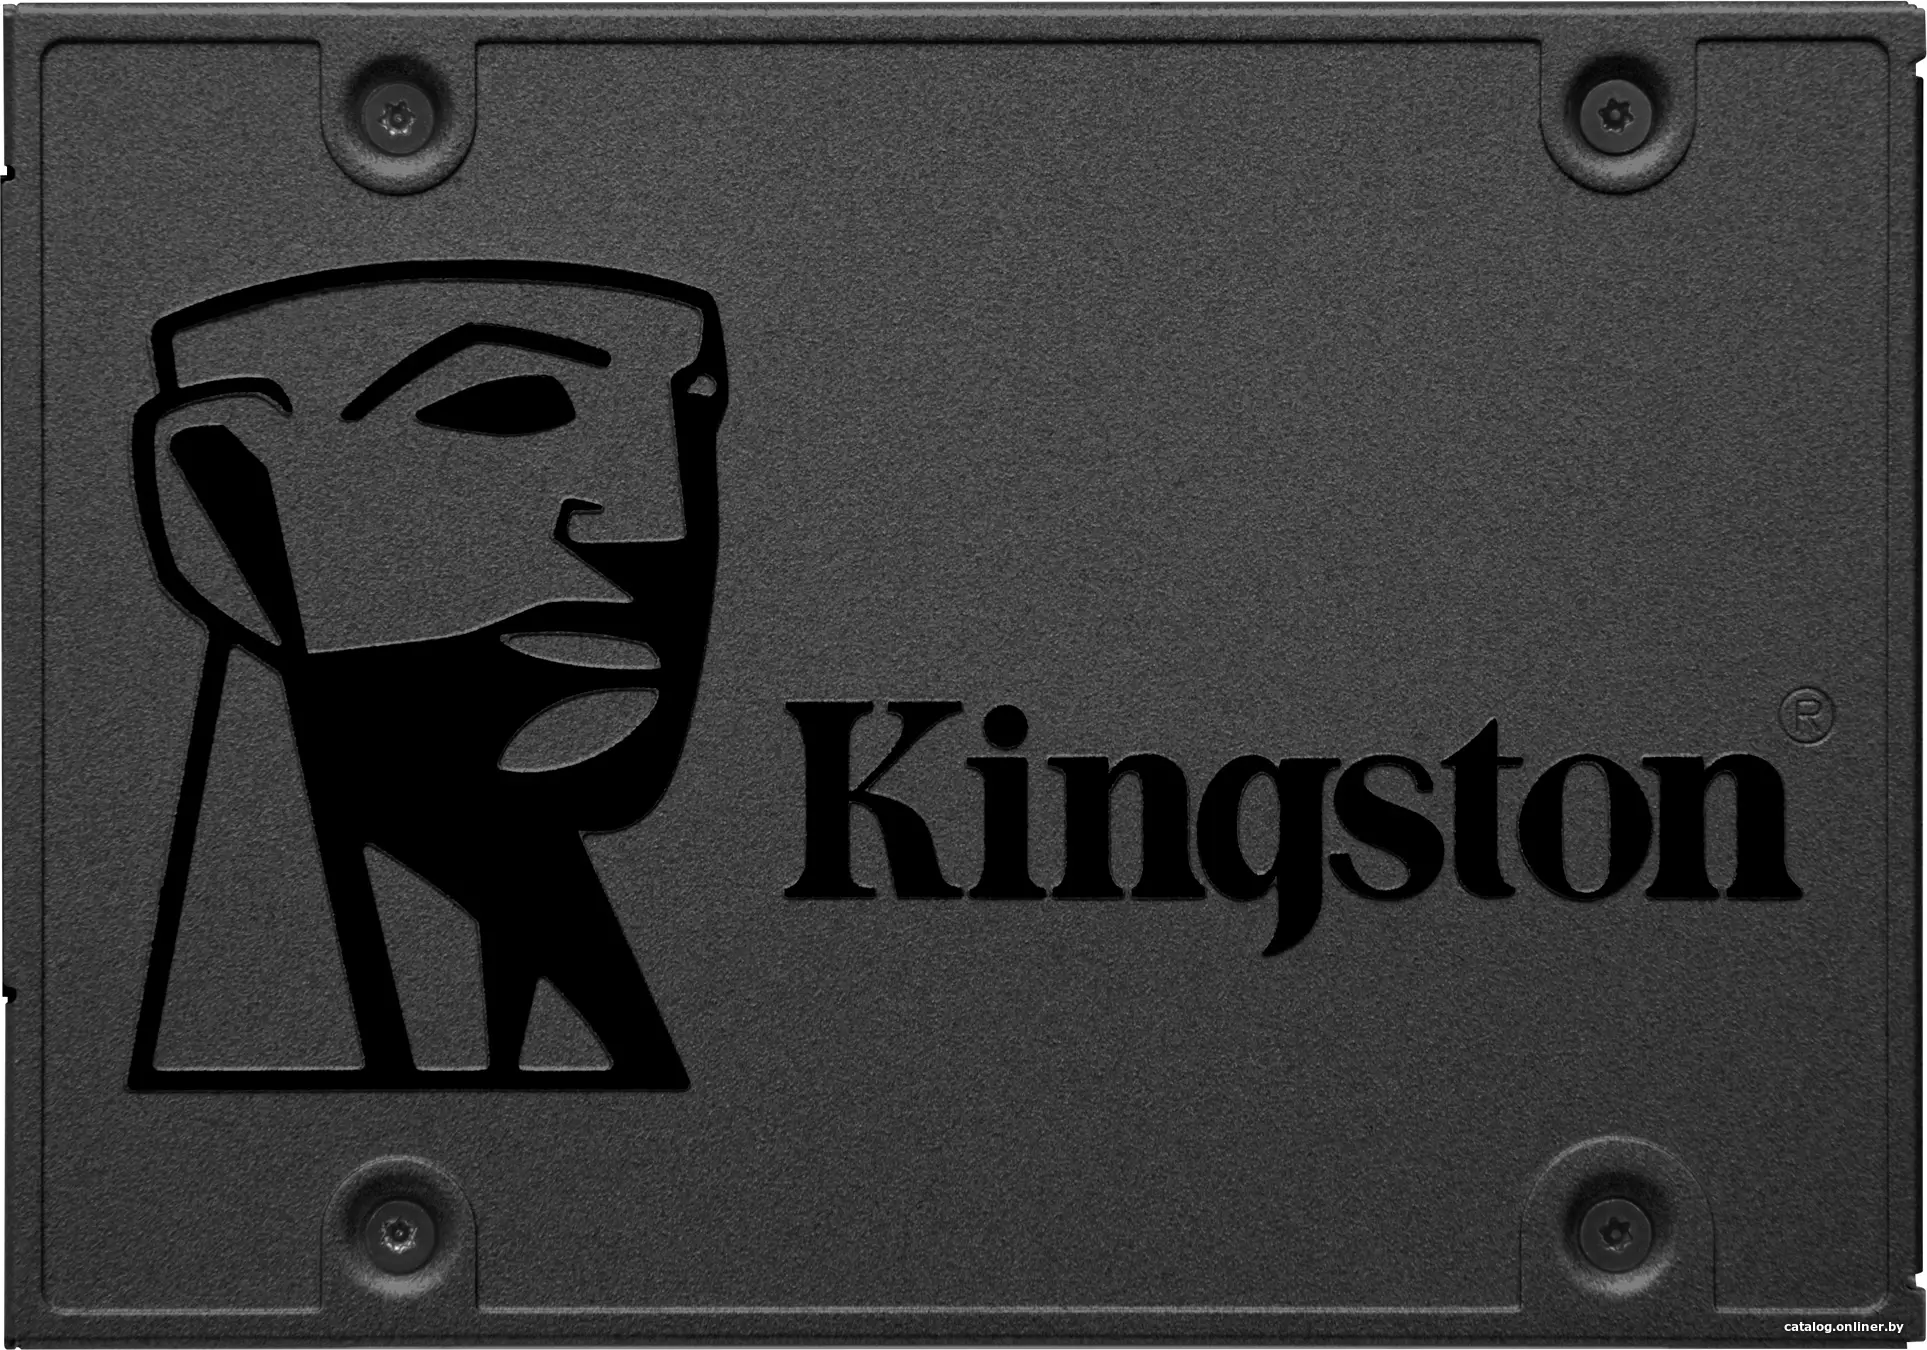 Купить SSD Kingston A400 240GB [SA400S37/240G], цена, опт и розница